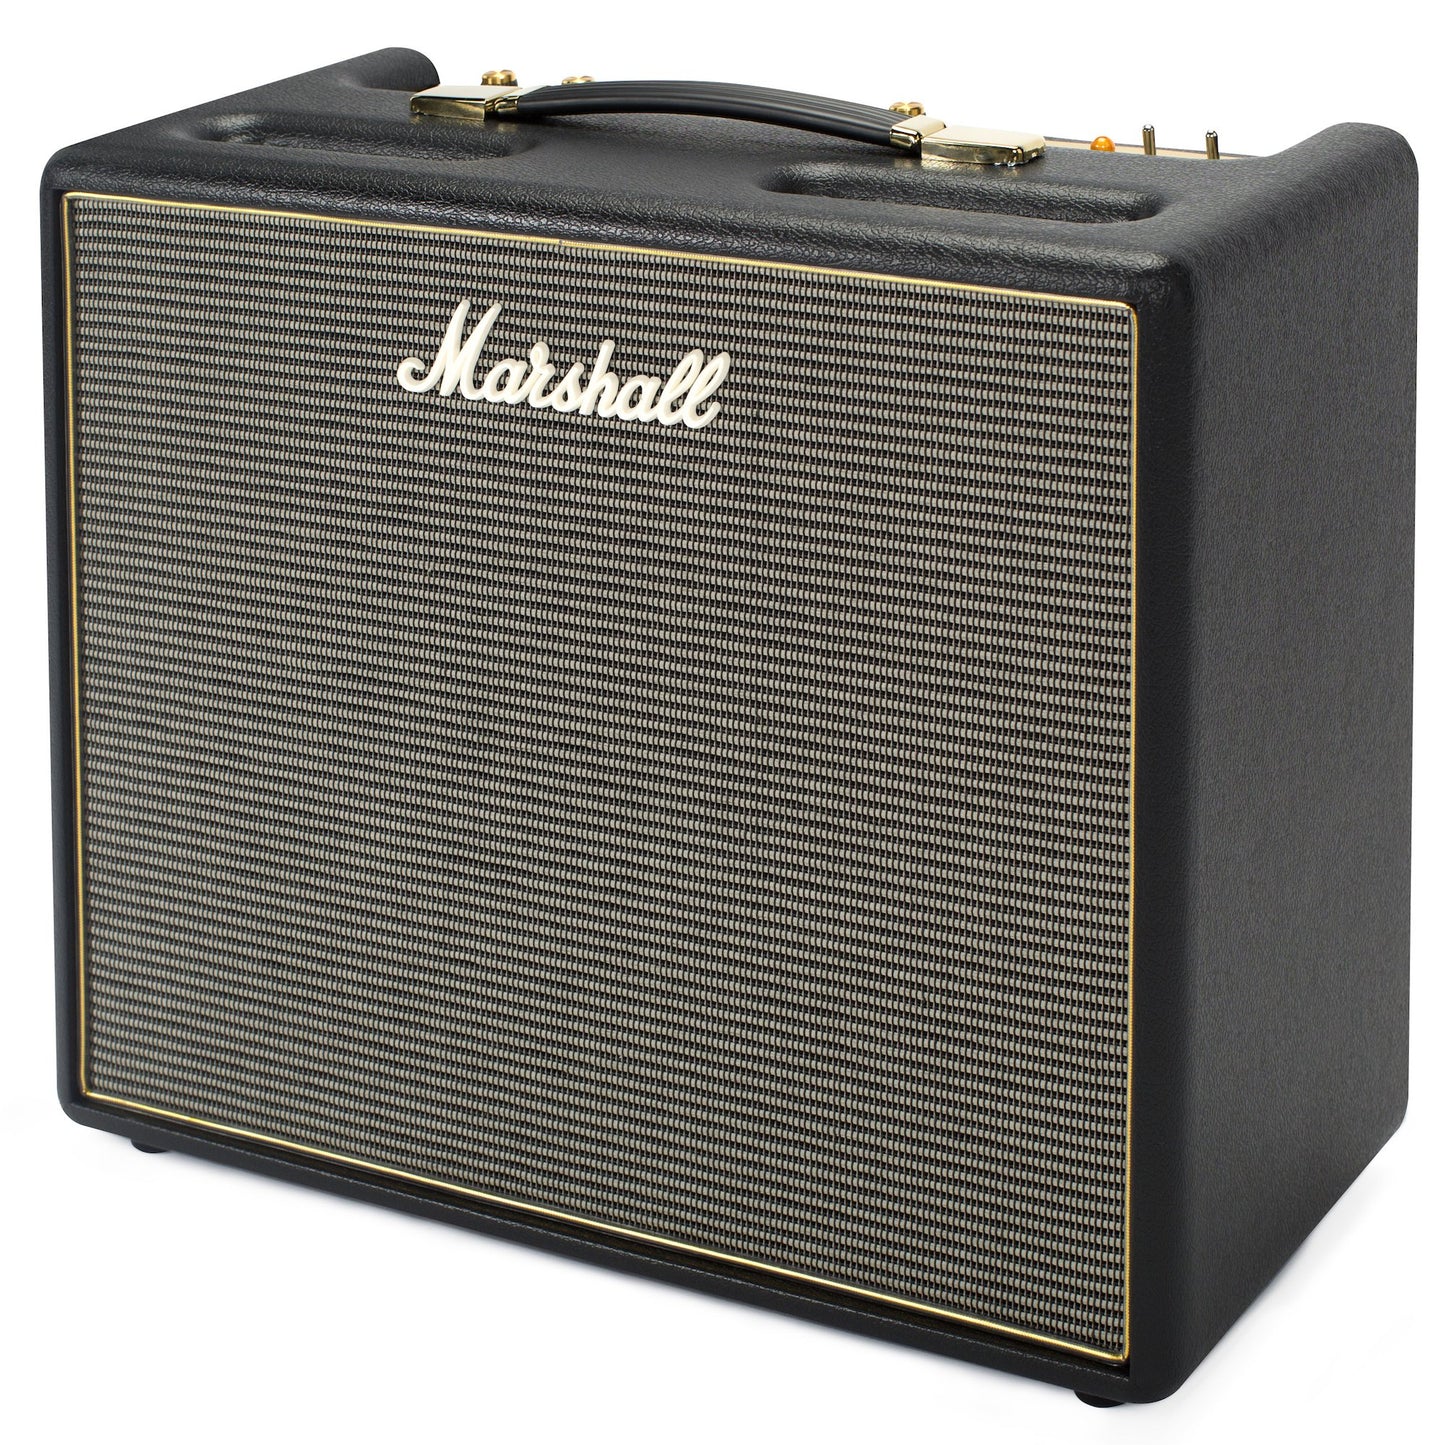 Marshall Origin20C Guitar Combo Amplifier (20 Watts, 1x10 Inch)